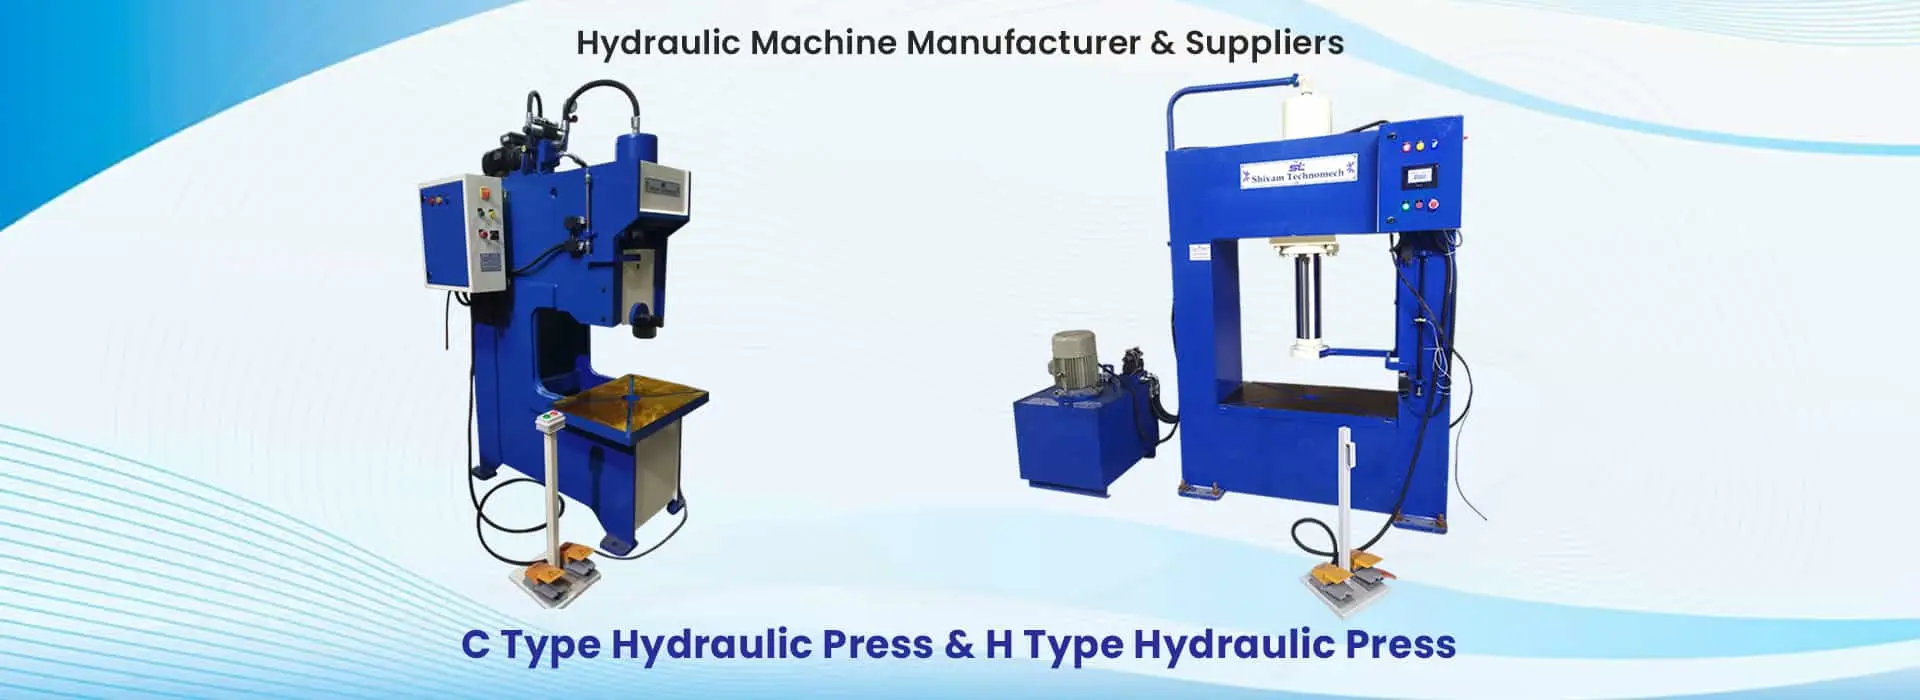 C Type Hydraulic Press and H Type Hydraulic Press